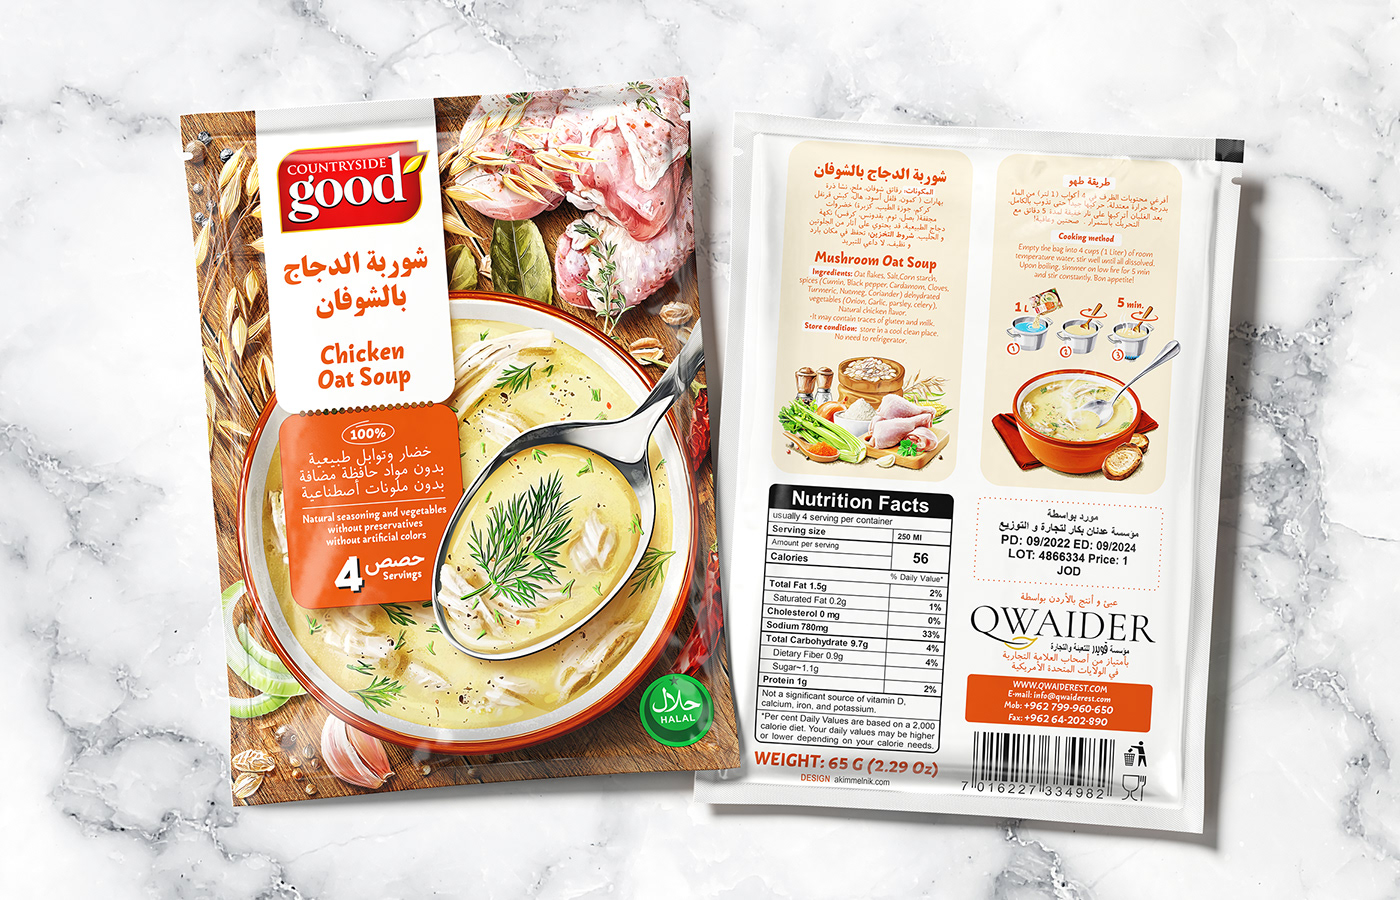 Food  oat soup Packaging packaging design sachet sachet design sachet package Soup soups СOUNTRYSIDE GOOD